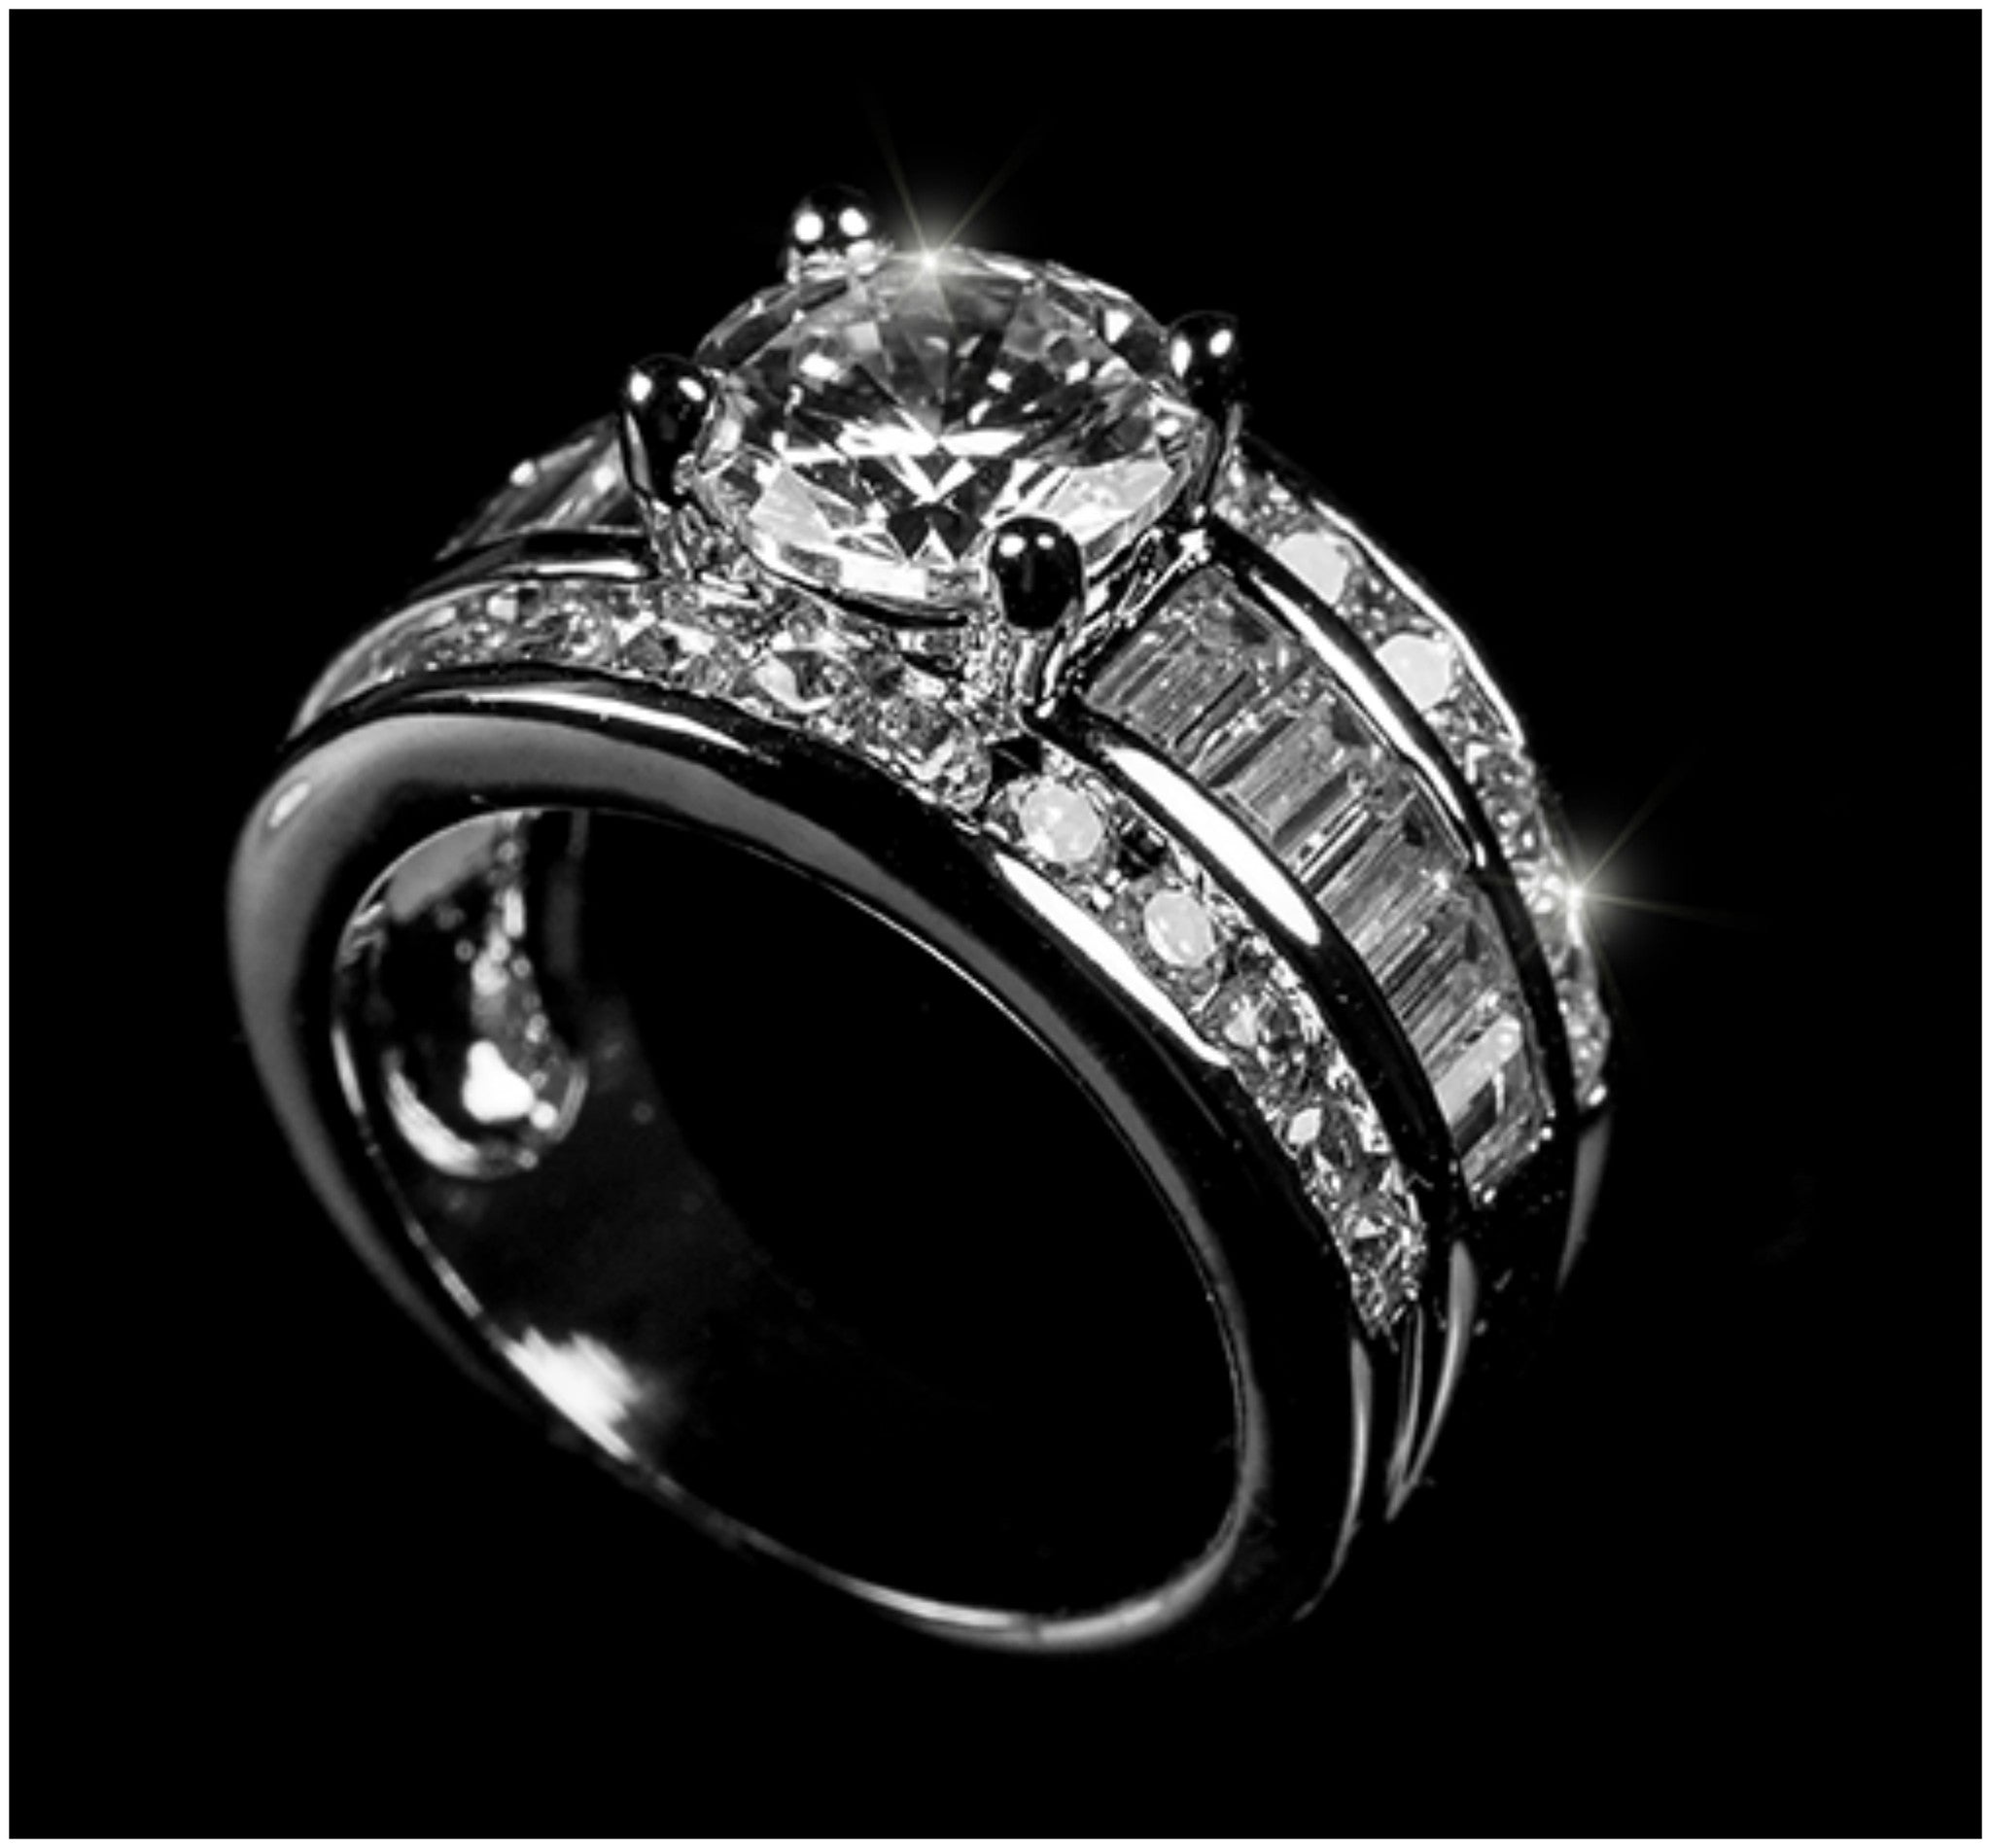 Large Fake Diamond Rings | 8 Carat Large Fake Engagement Ring | Emerald Cut CZ Stone | 925 Sterling Silver | Luxuria Diamonds Jewelry Brand